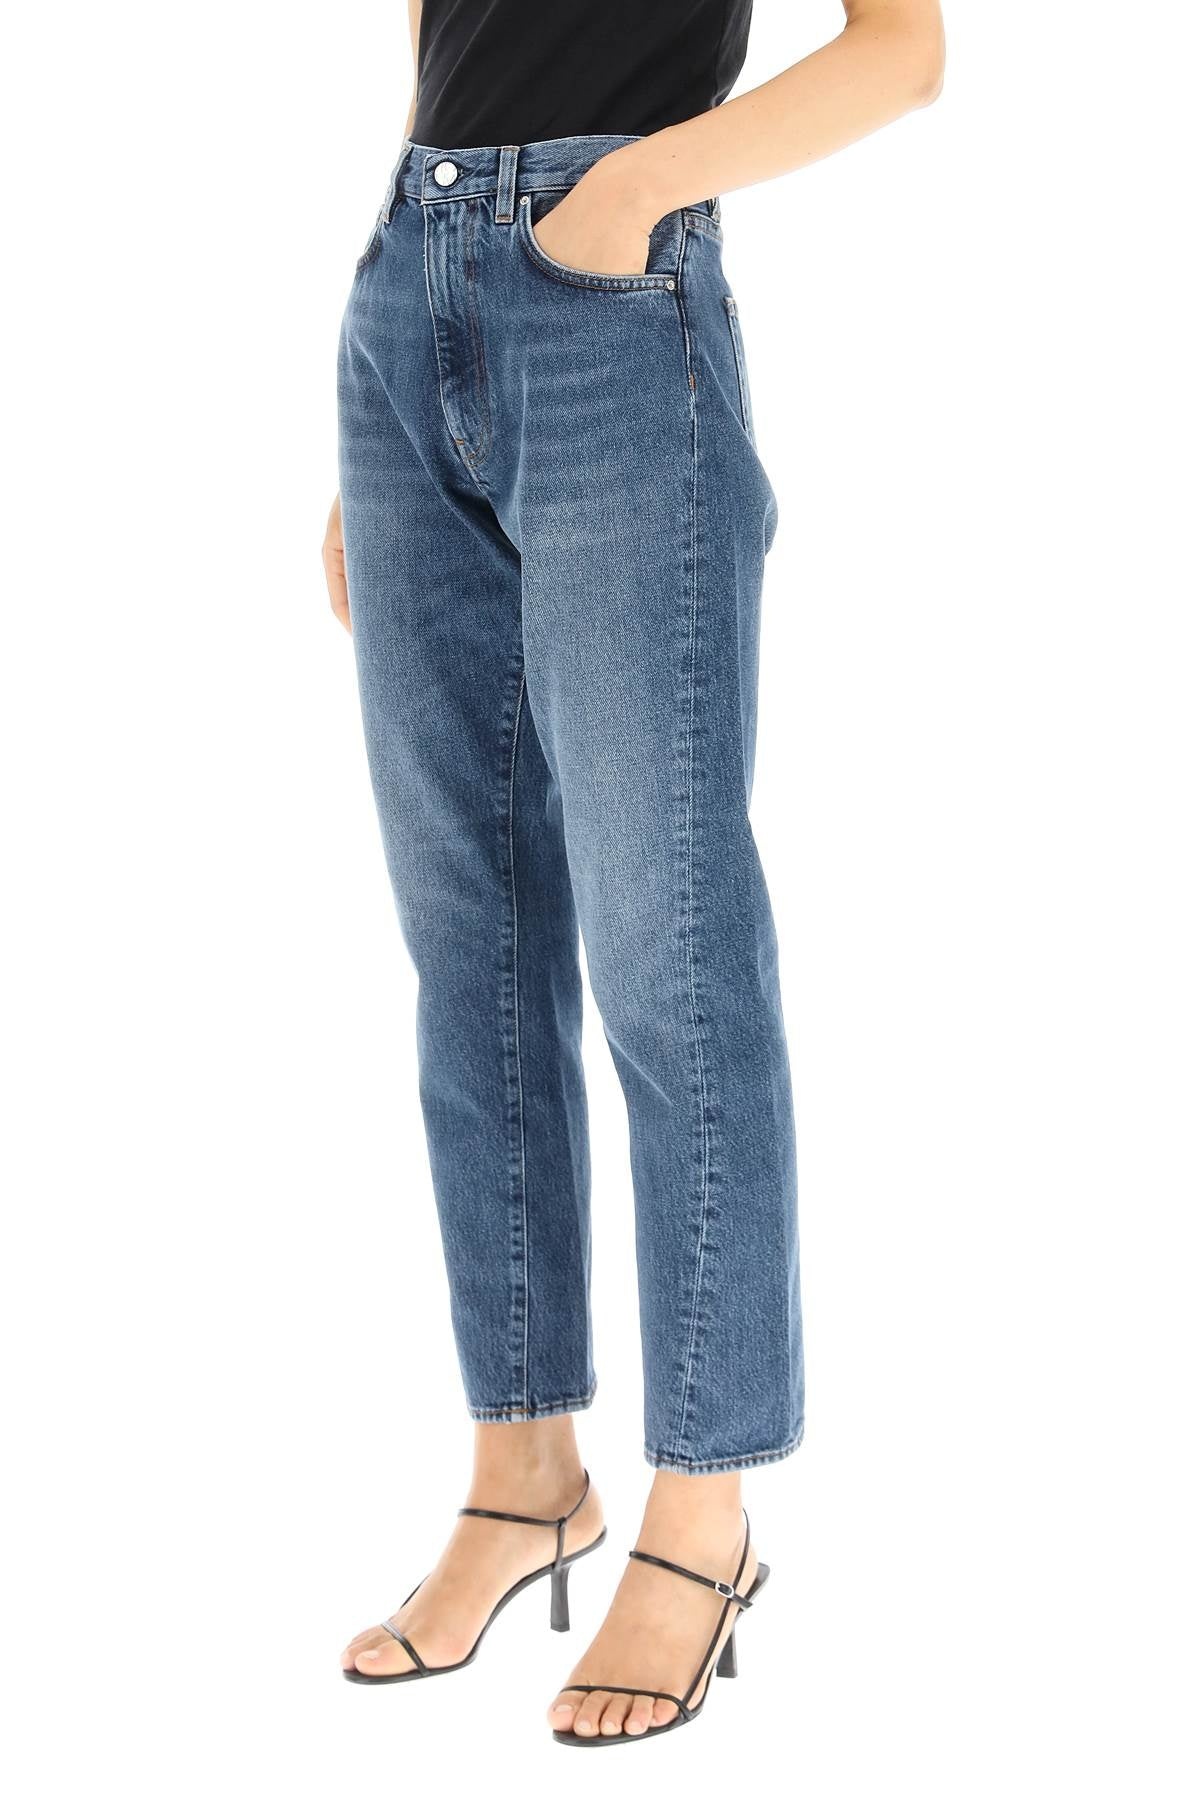 Toteme Twisted Seam Slim Jeans Women - 4